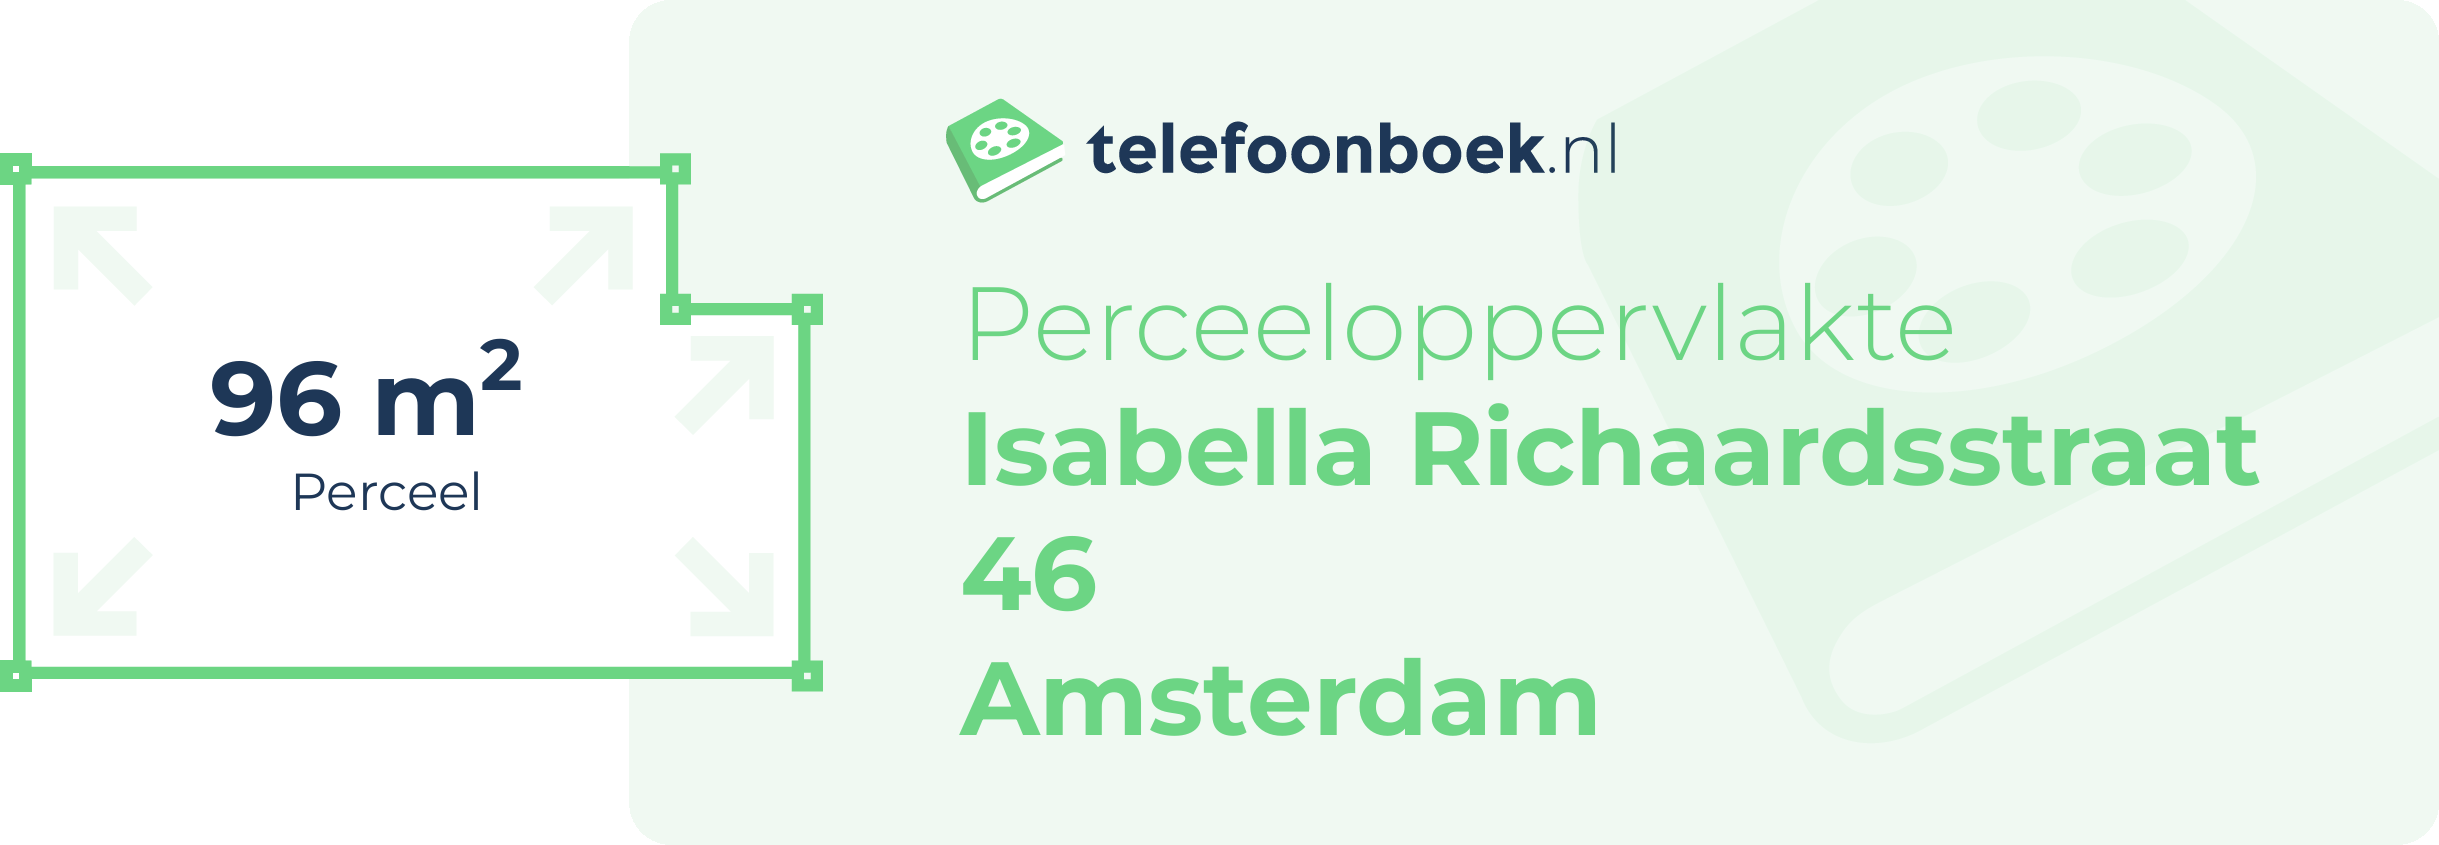 Perceeloppervlakte Isabella Richaardsstraat 46 Amsterdam